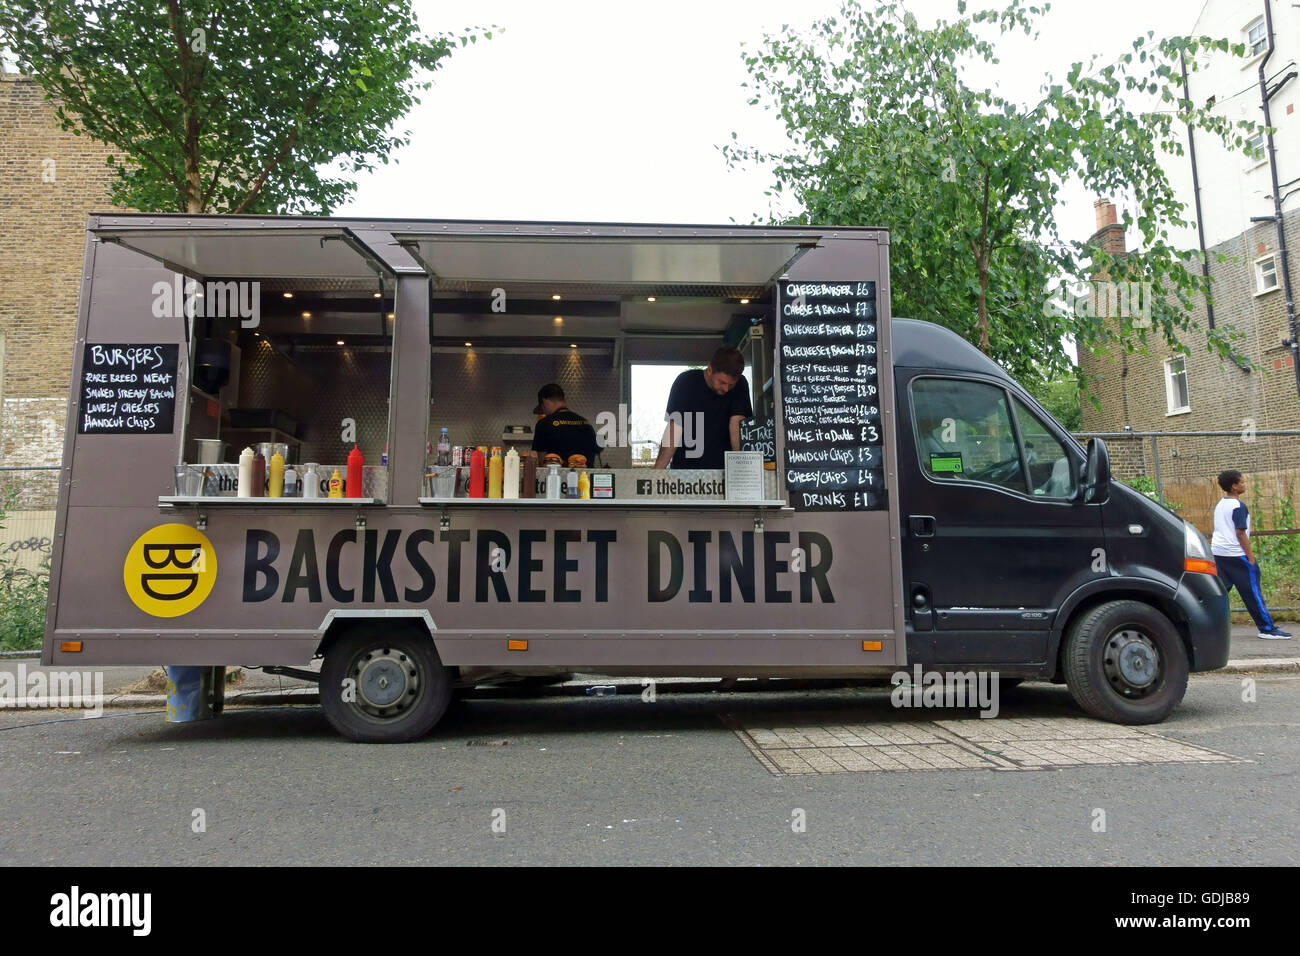 Backstreet Diner mobile food outlet at London event Stock Photo